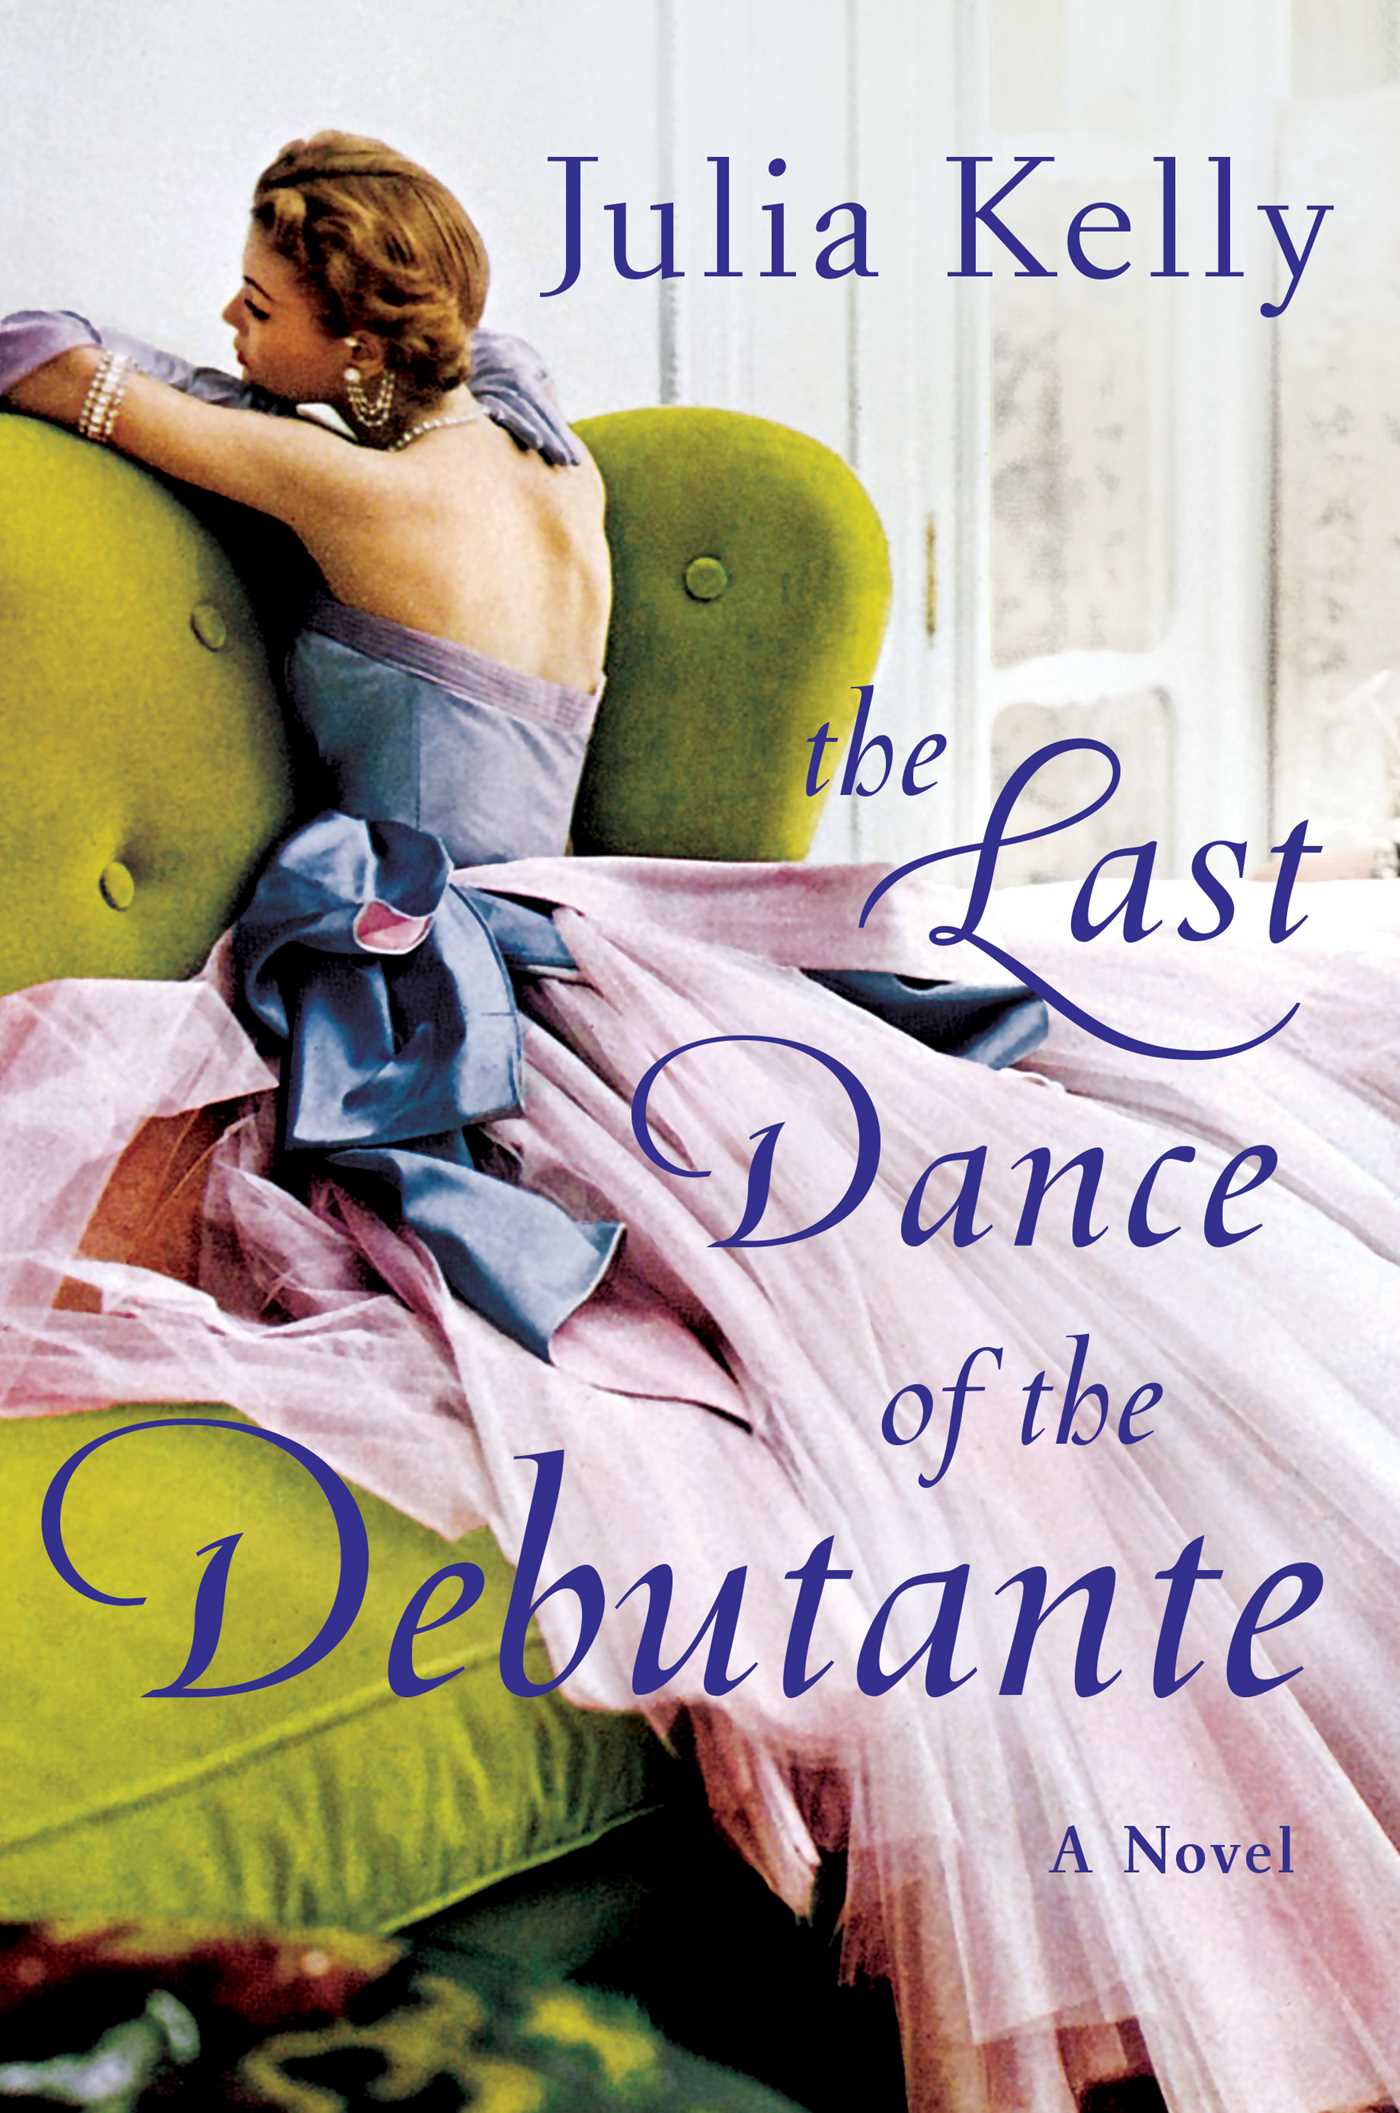 The Last Dance of the Debutante by Julia Kelly